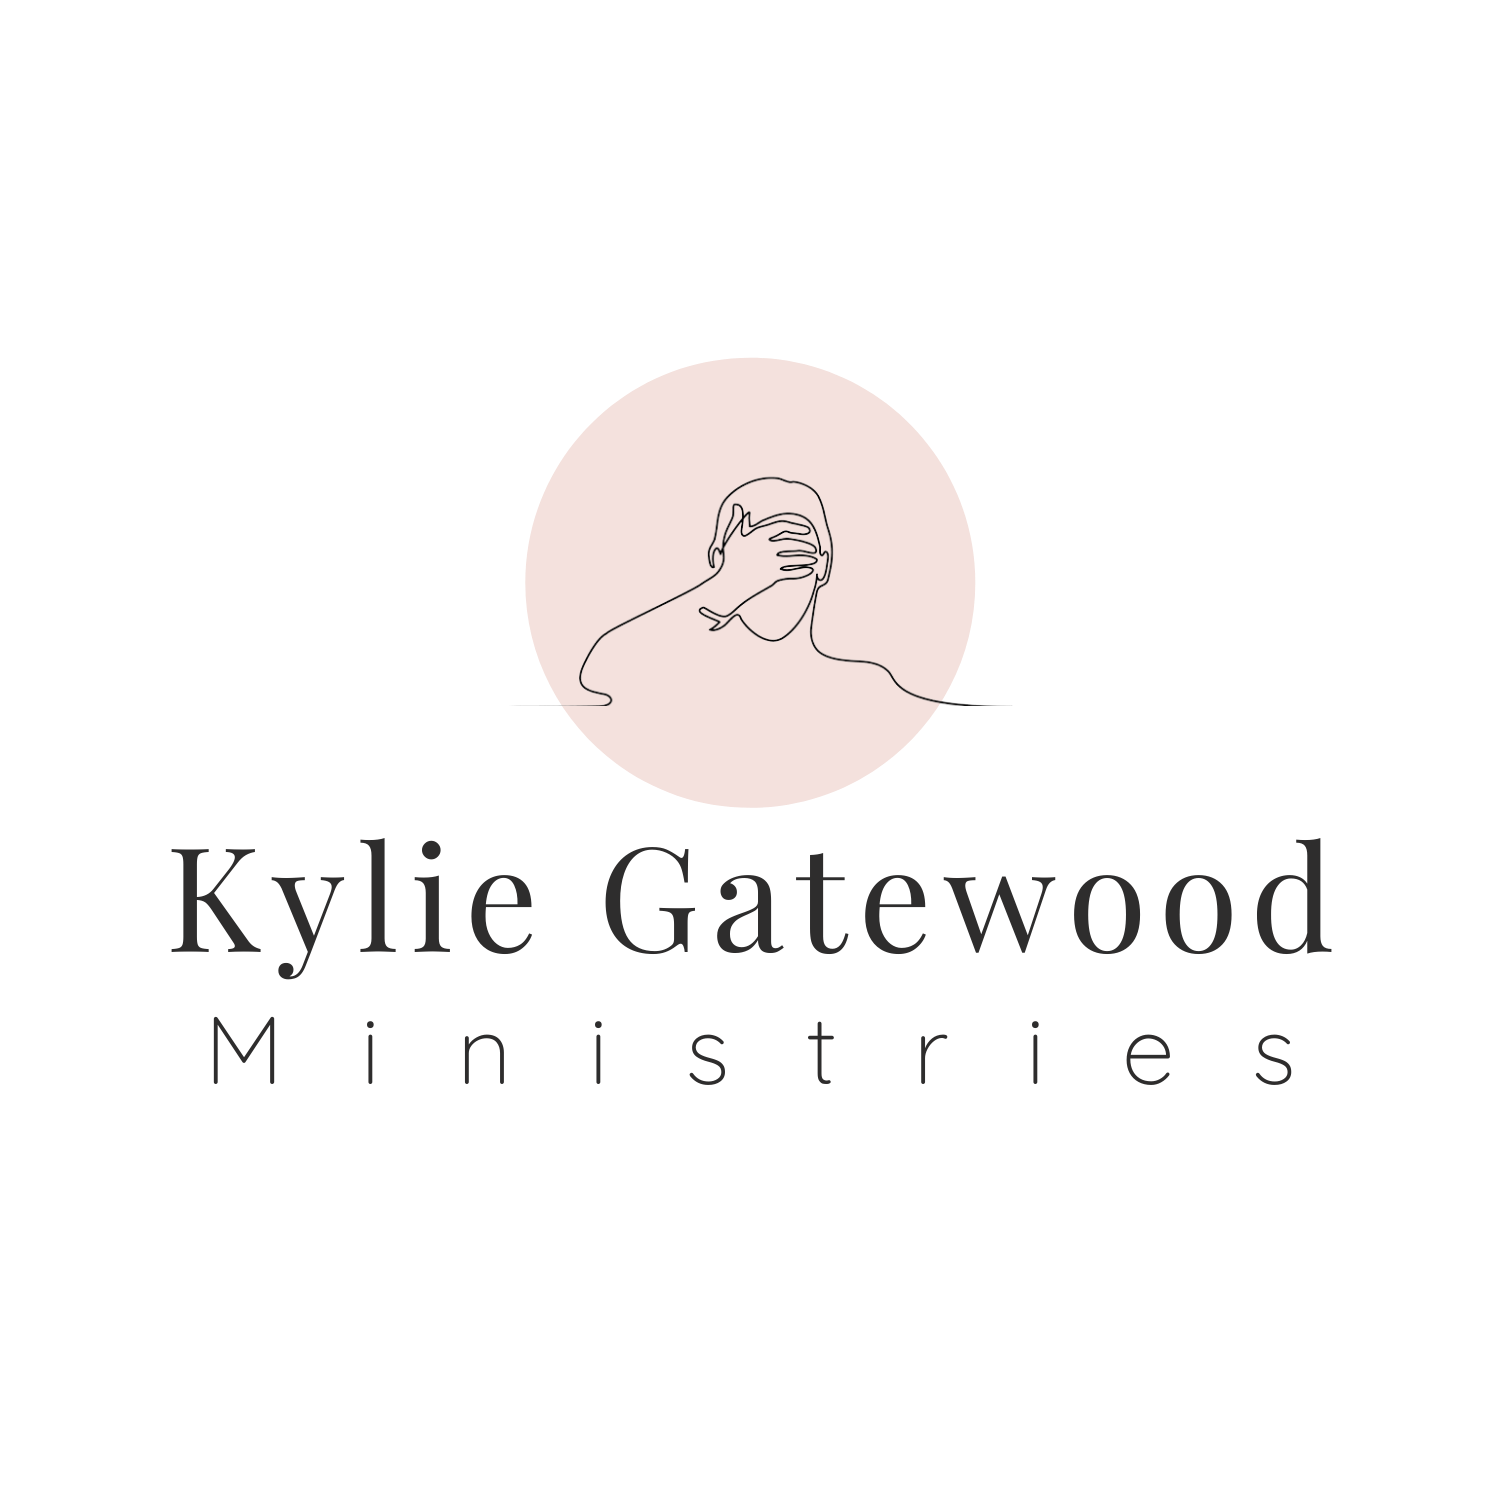 Kylie Gatewood Ministries